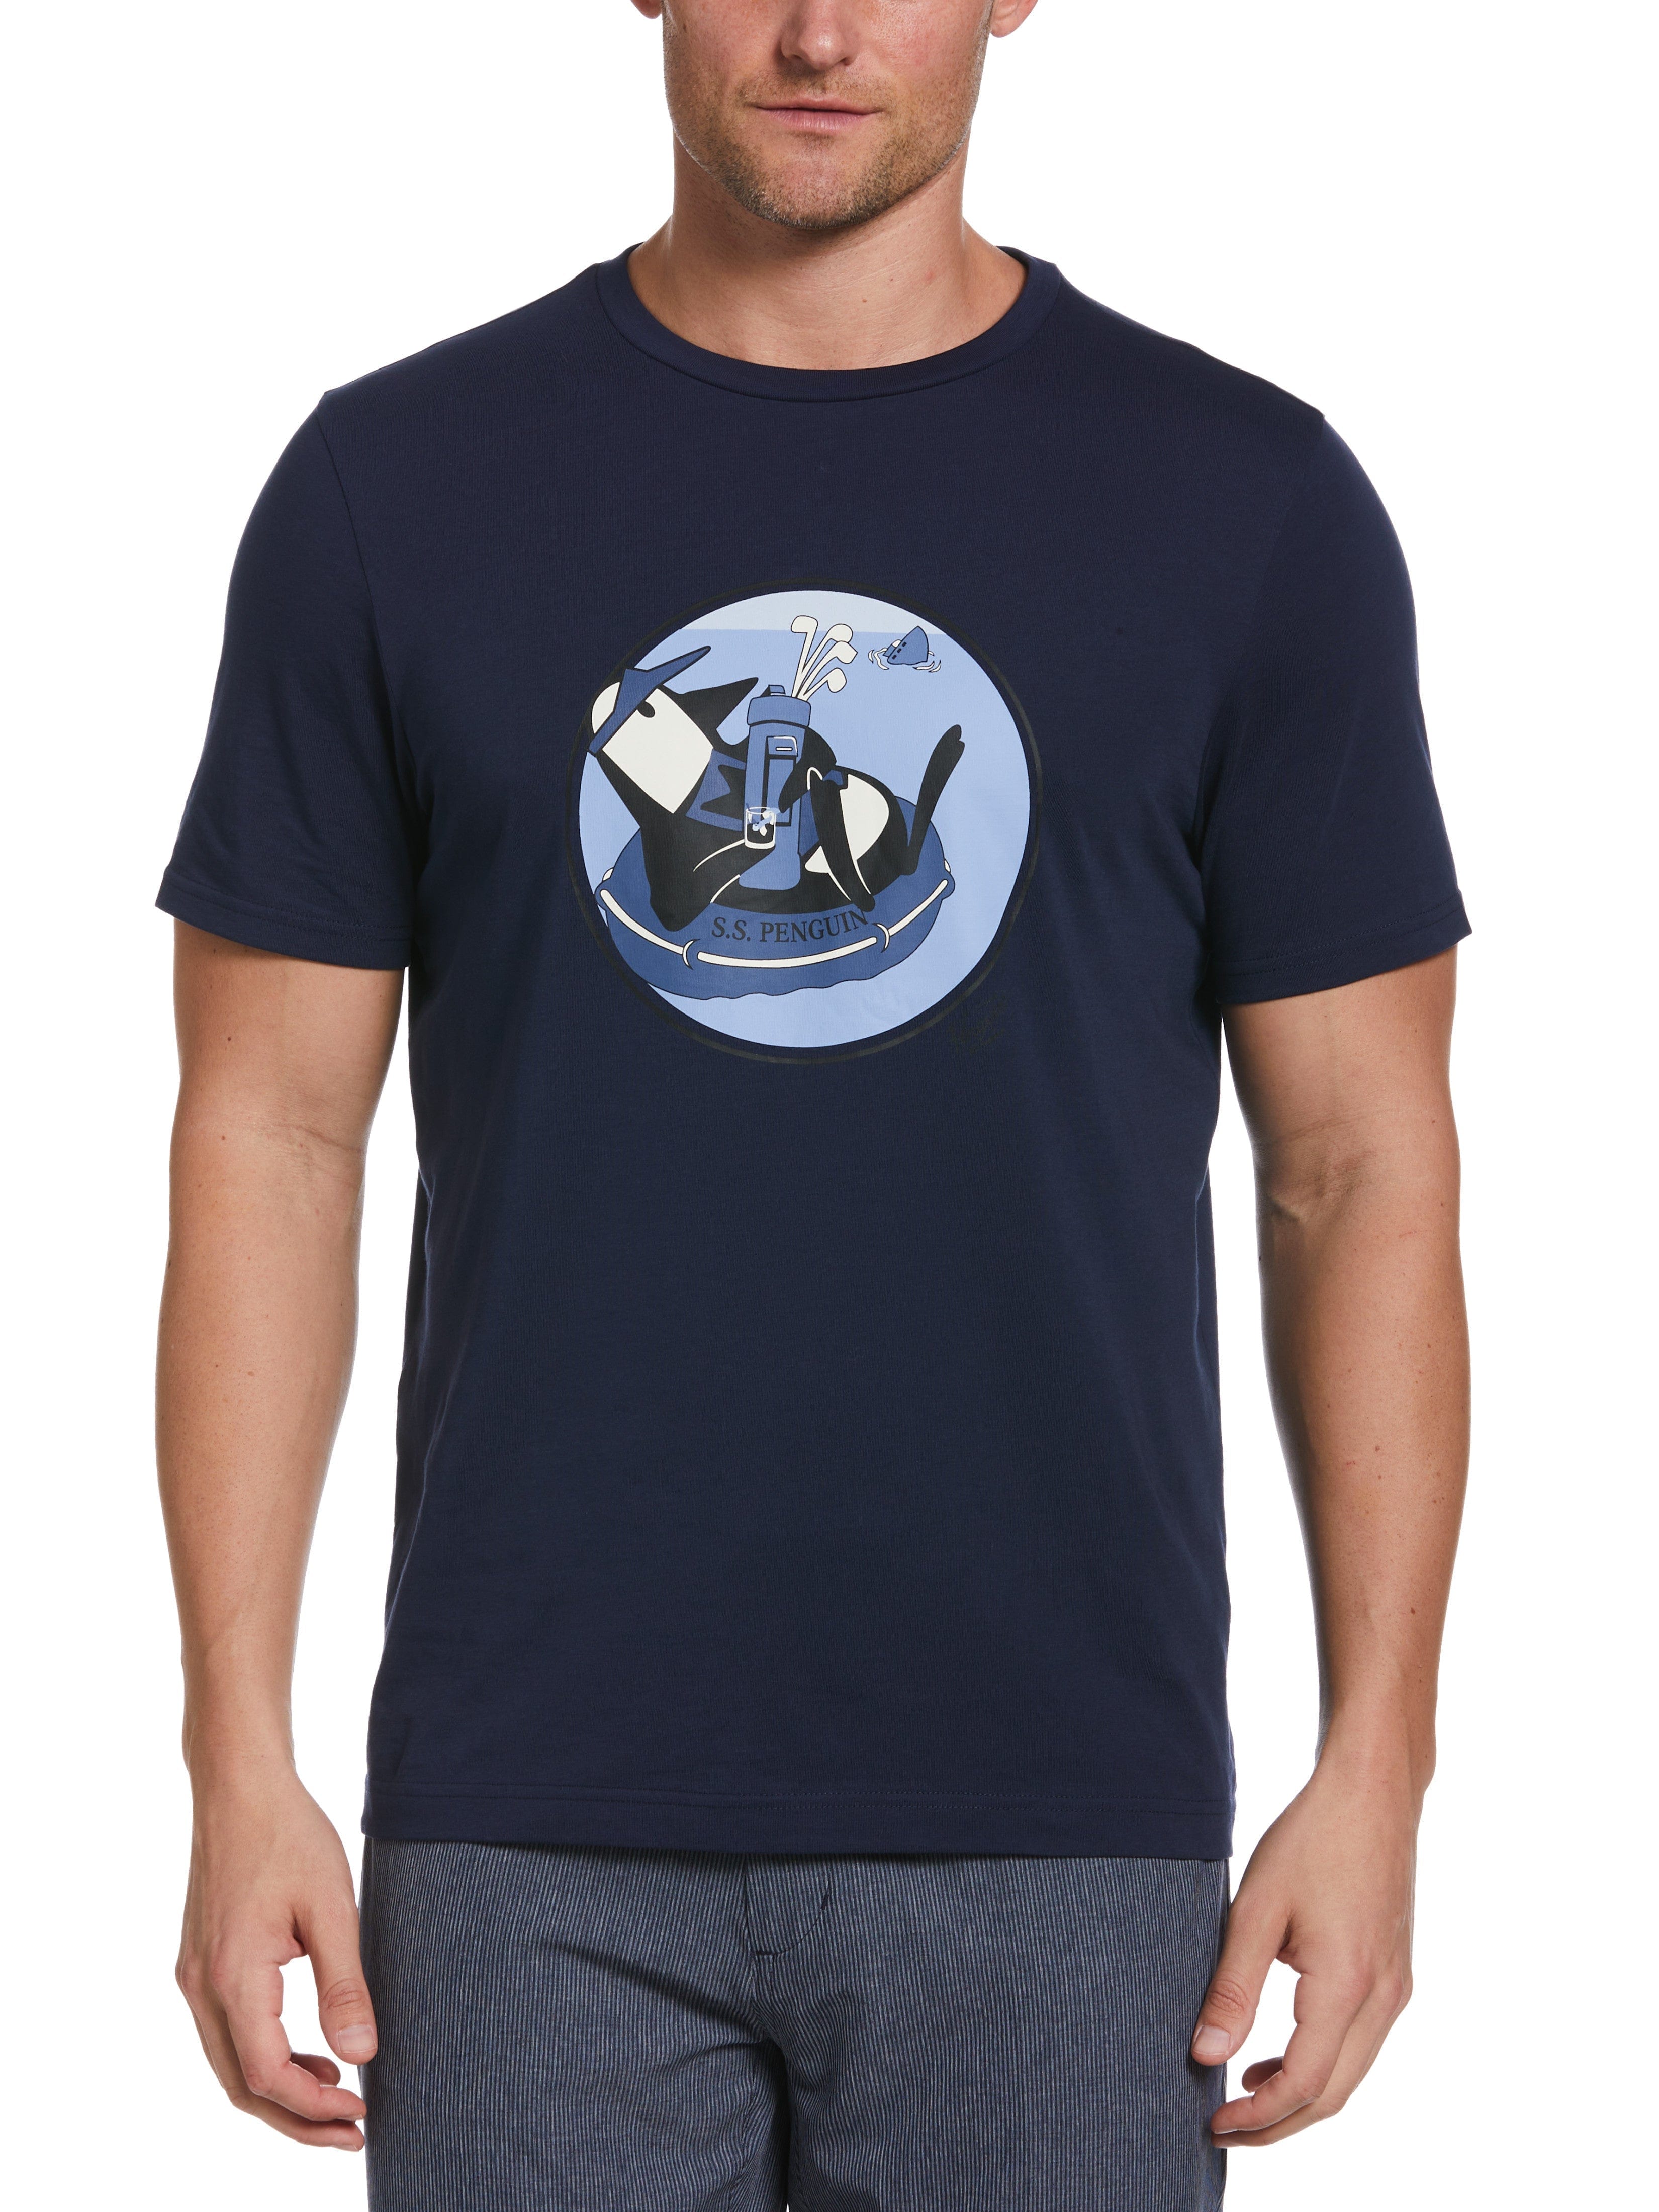 Original Penguin Mens Shipwreck Pete Graphic Golf T-Shirt, Size 2XL, Dark Navy Blue, 100% Cotton | Golf Apparel Shop